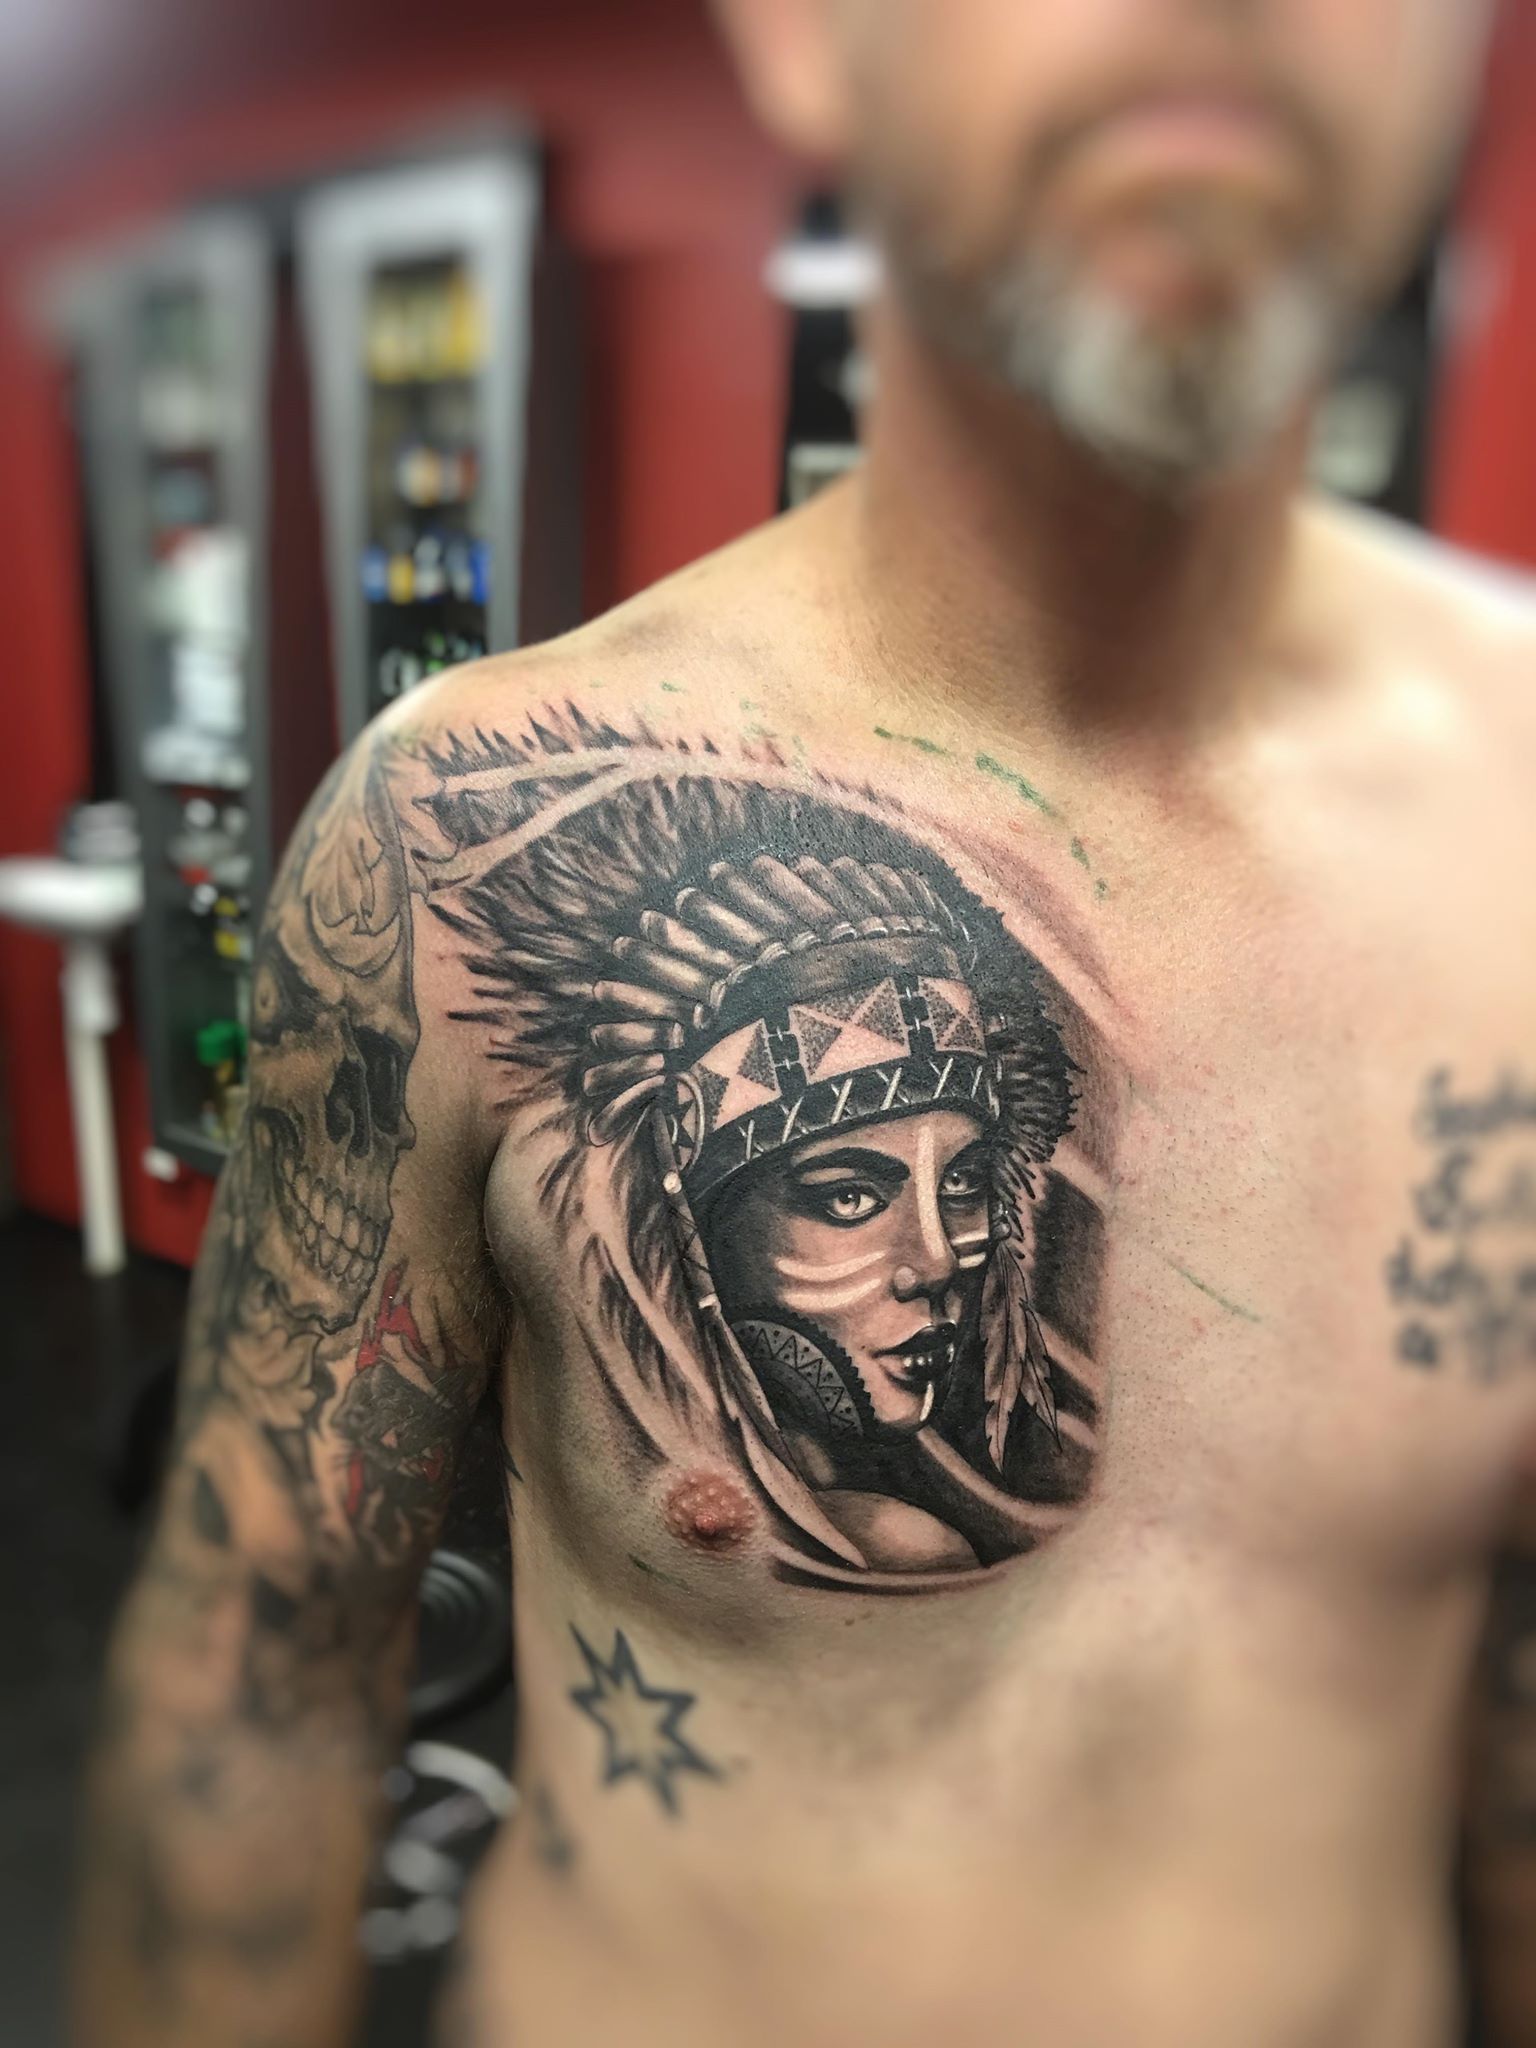 Black and grey realism tattoos by Balaclava Ink Tattoo Artists in Brisbane